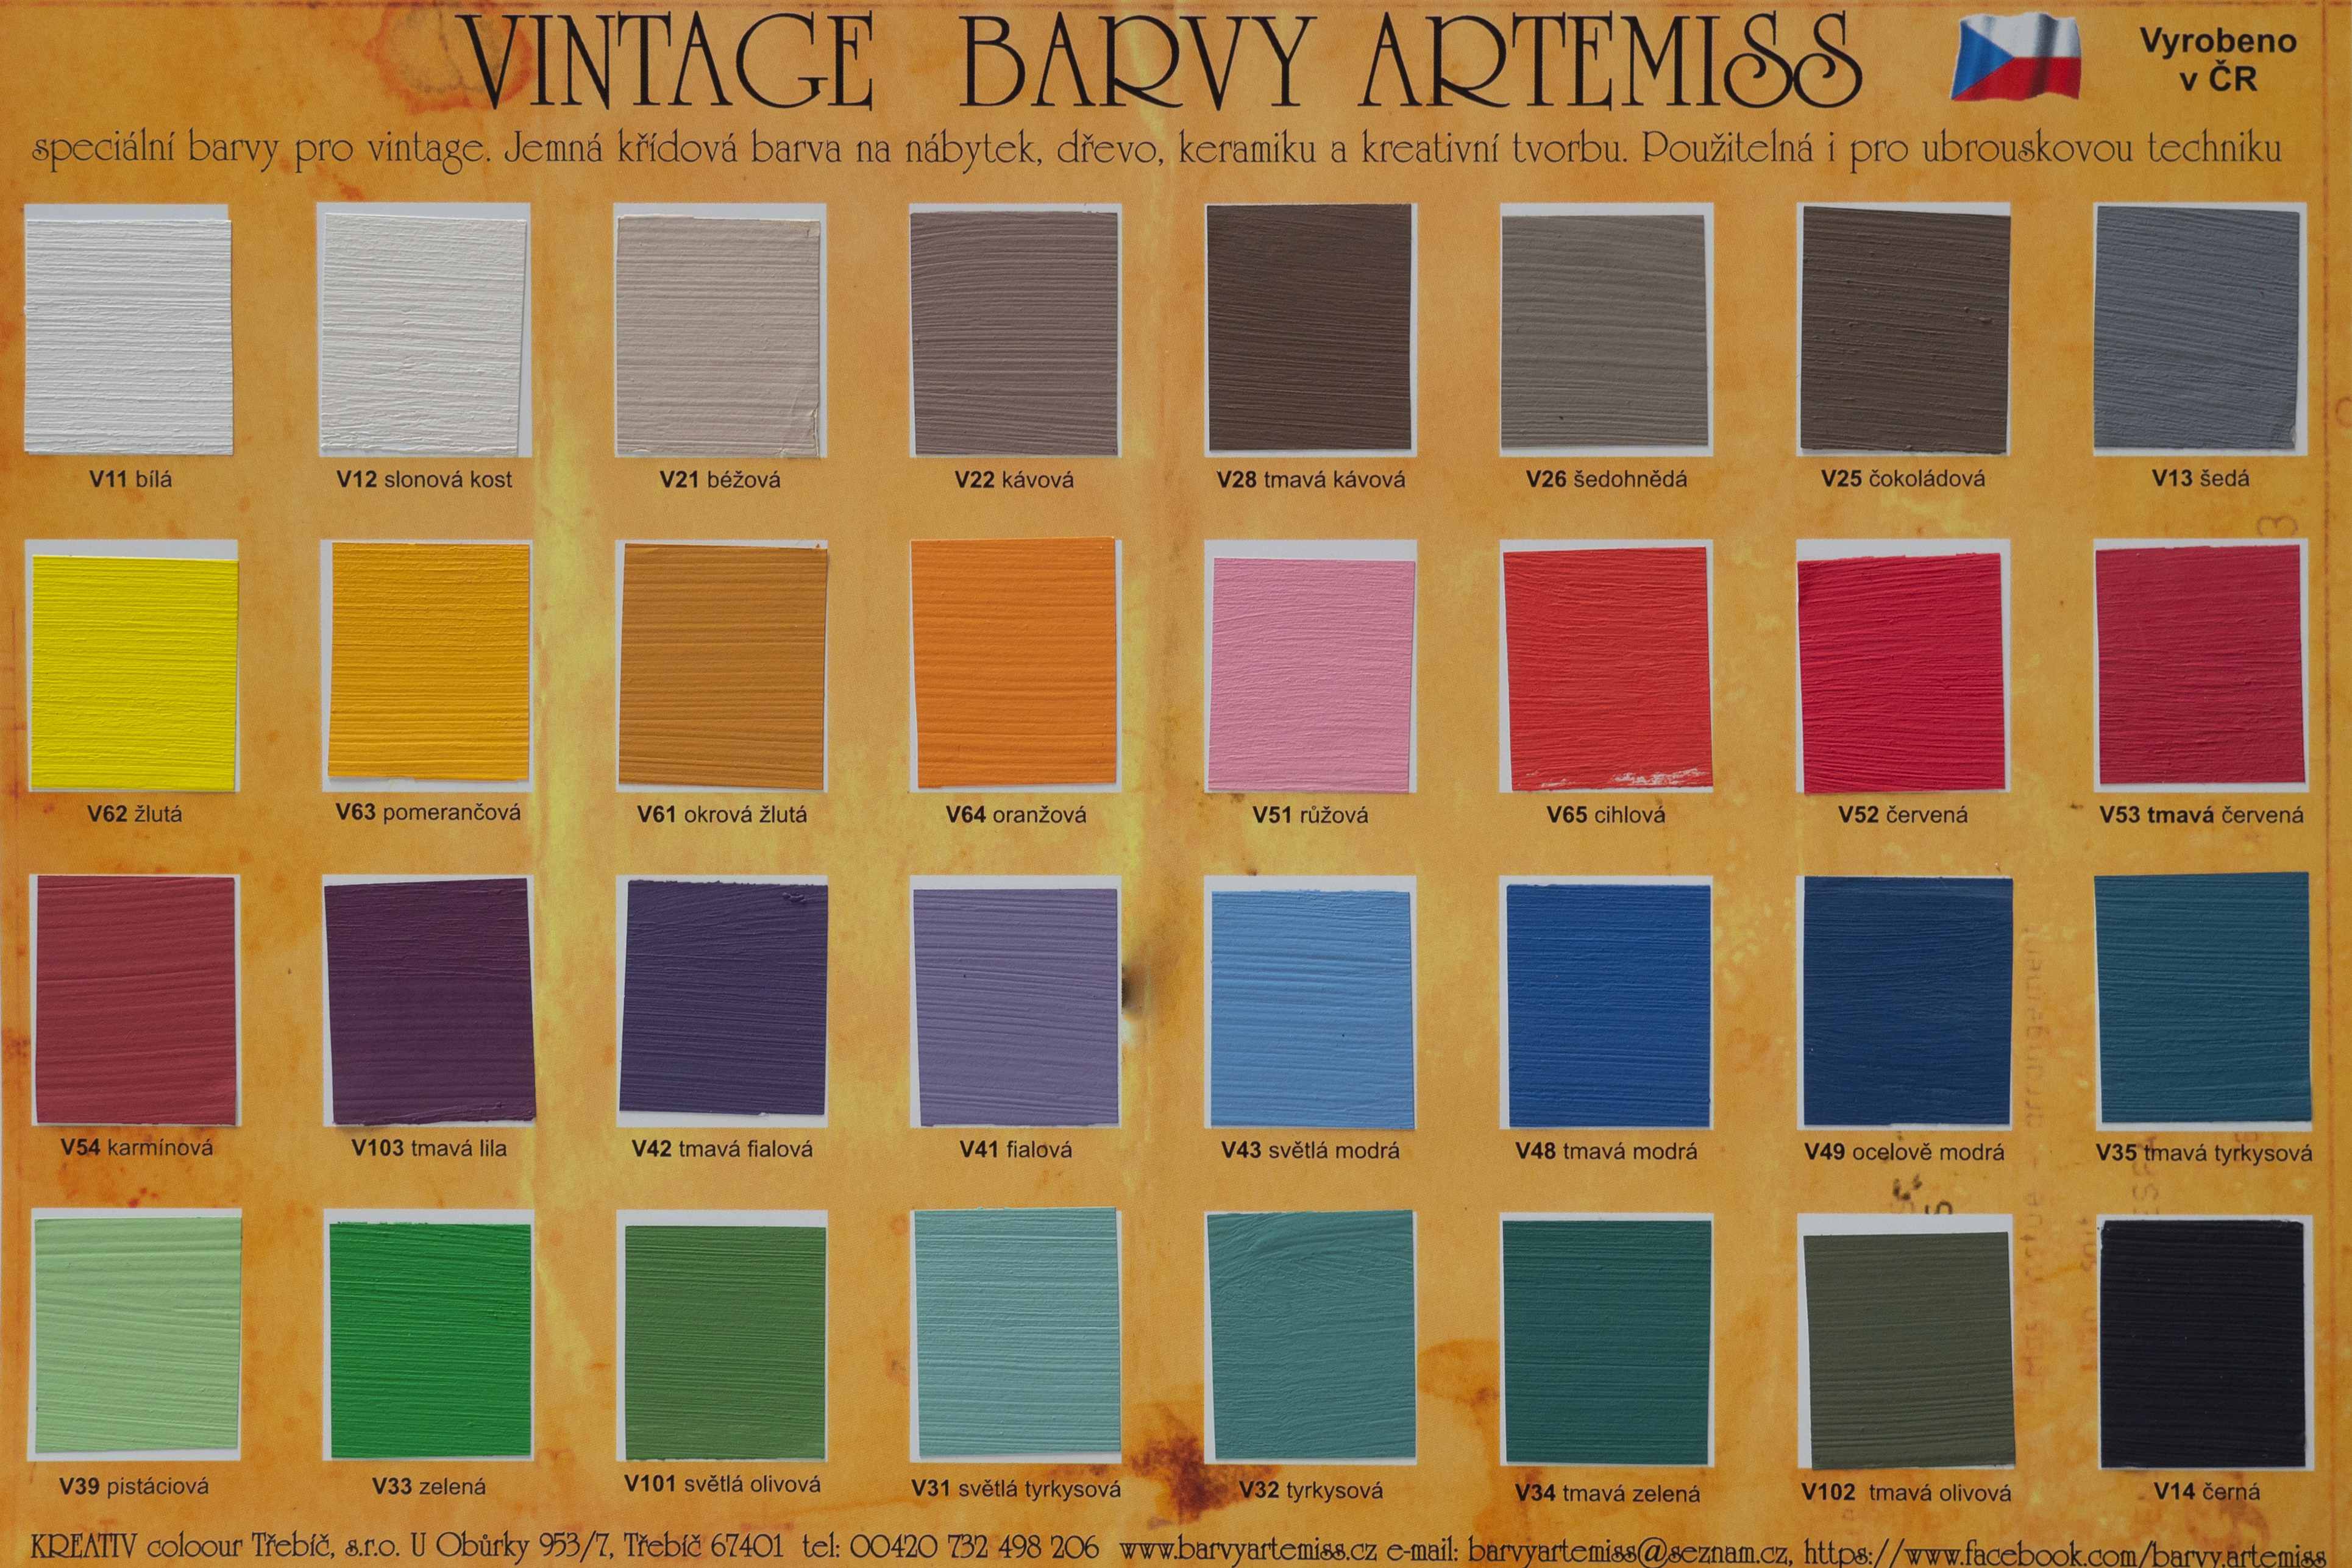 Vzorník vintage barev ARTEMISS